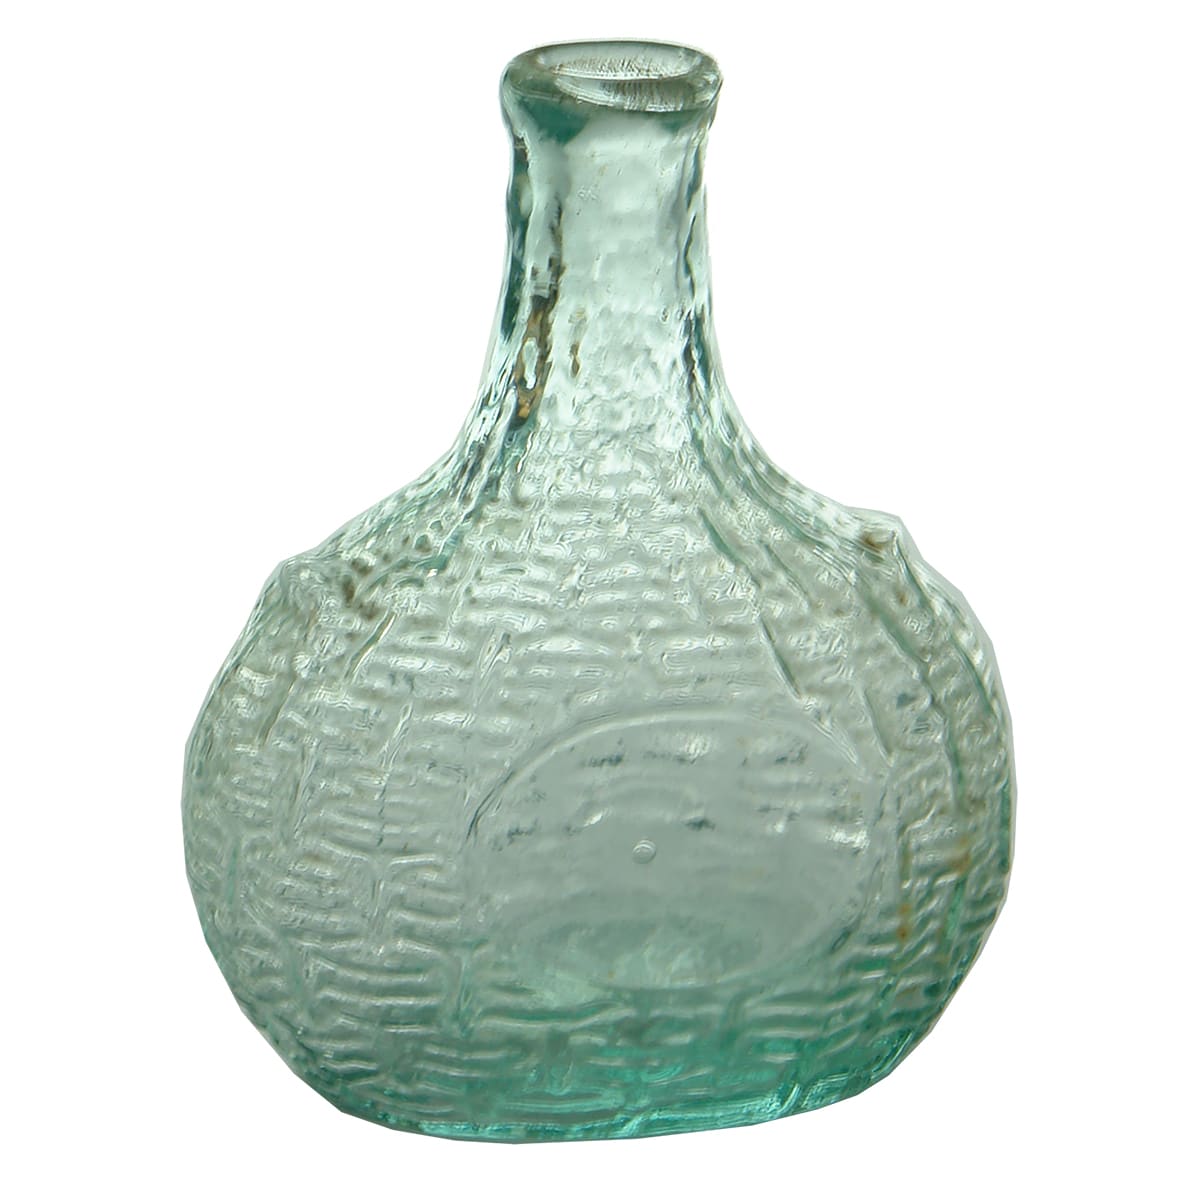 Sample. Basket weave glass "Demijohn". Tube pontil scar to base. Aqua. About 2 oz.